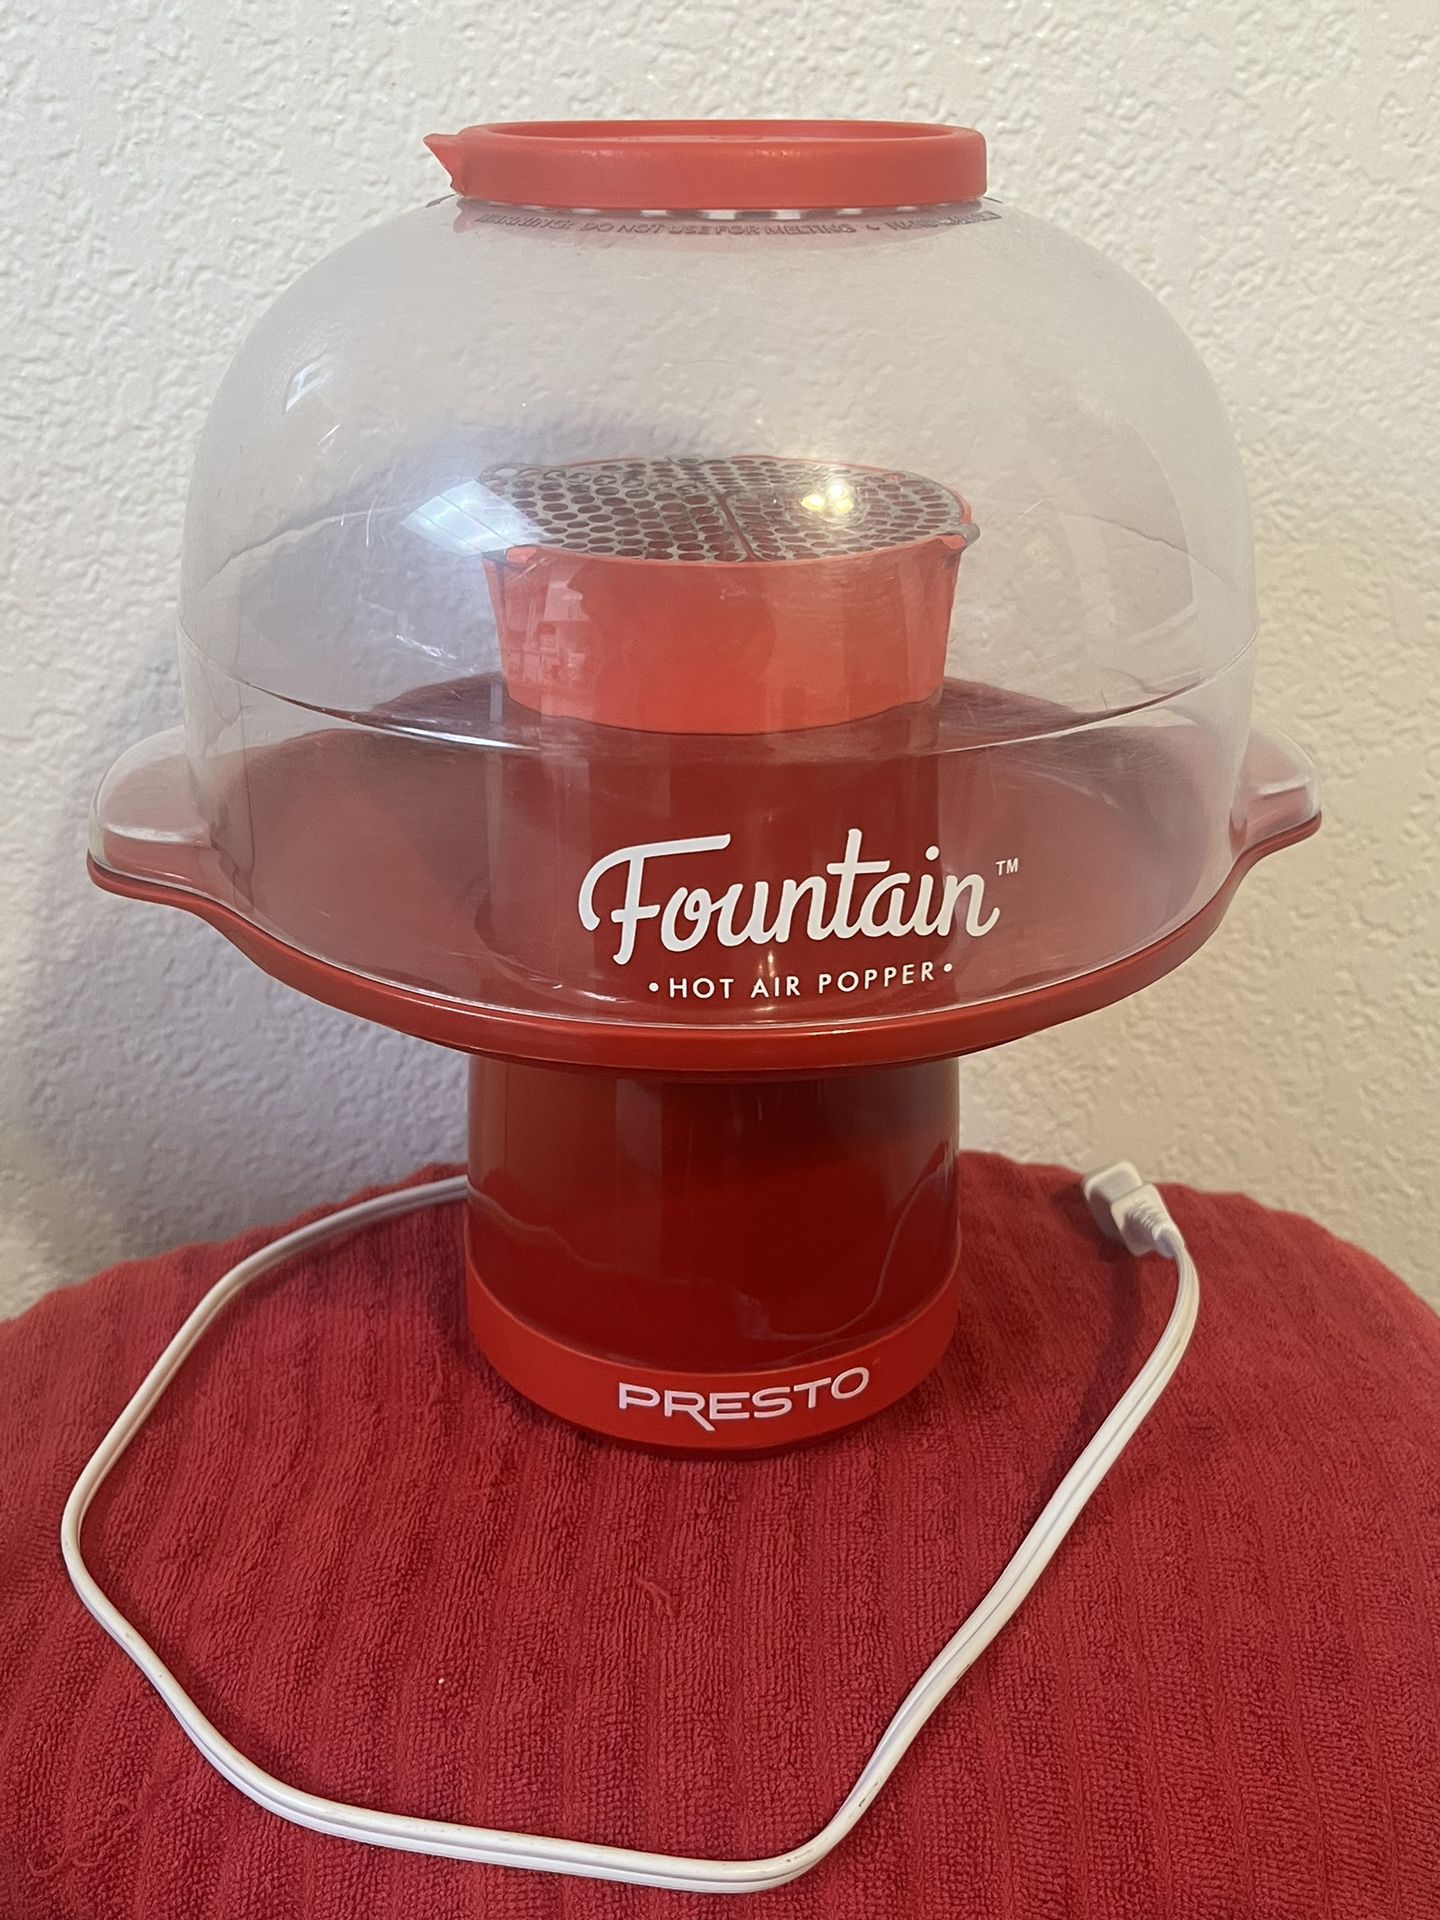 Presto Orville Redenbacher’s Fountain Hot Air Popper 